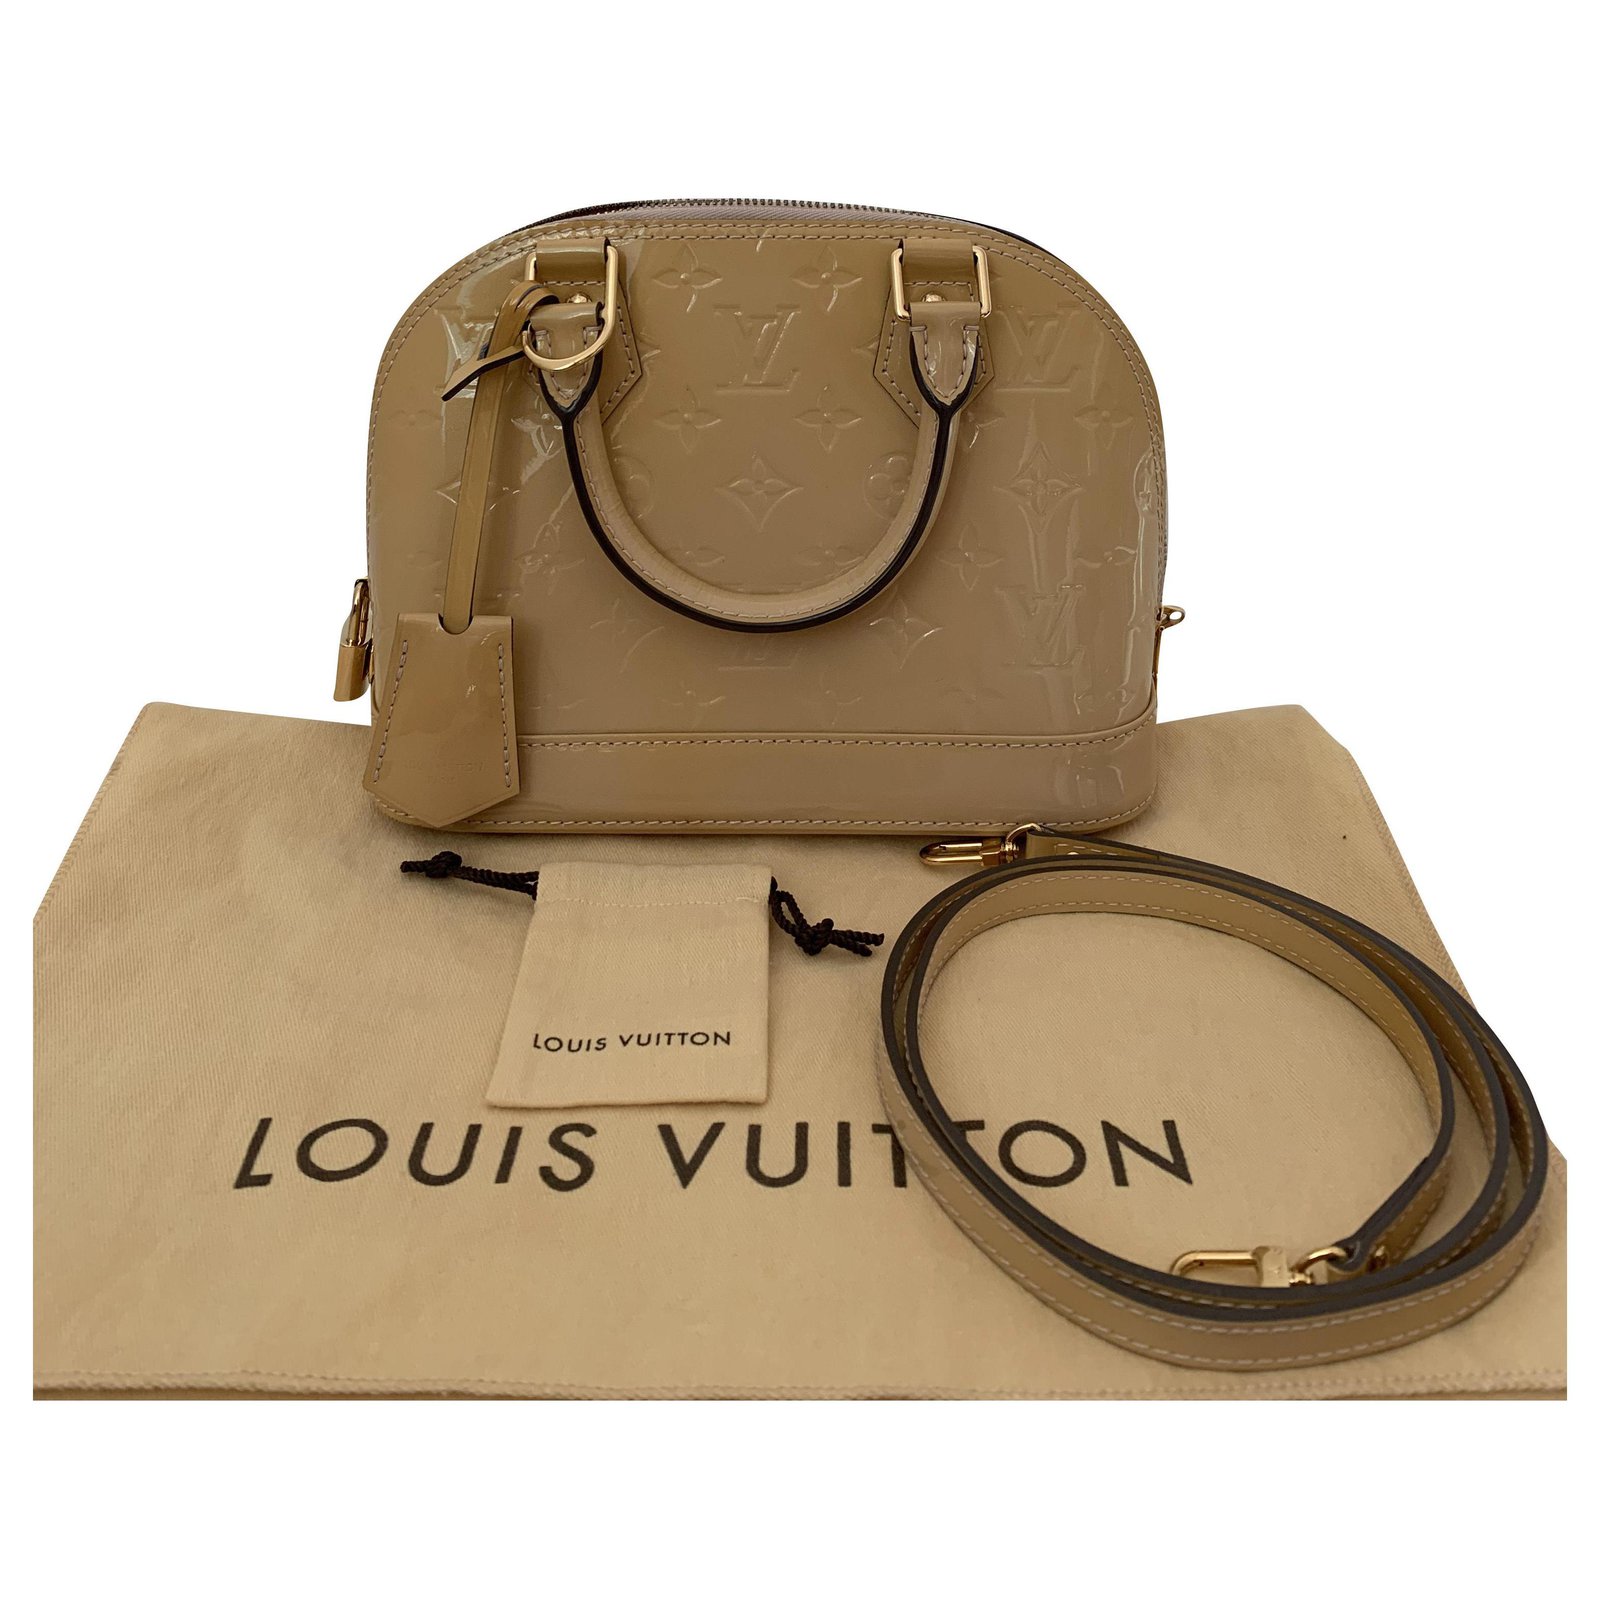 Louis Vuitton Alma BB, Beige, One Size